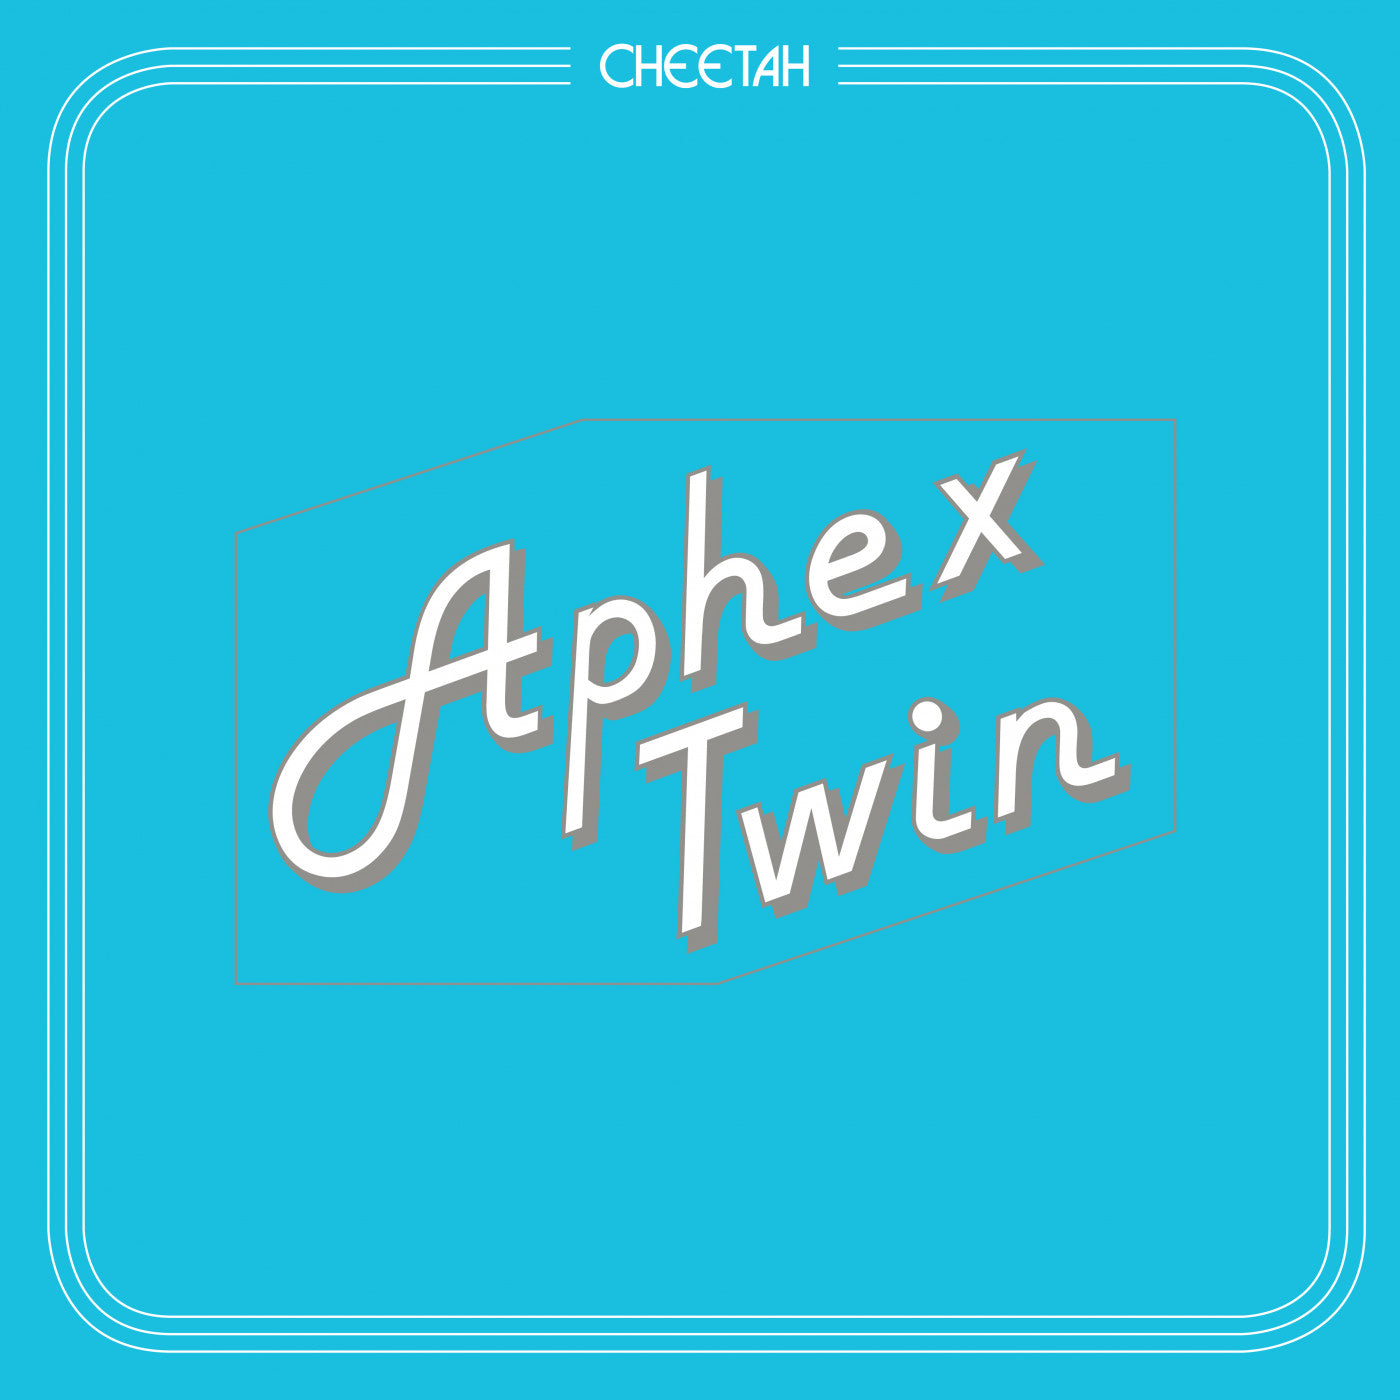 Aphex Twin - Cheetah 12”